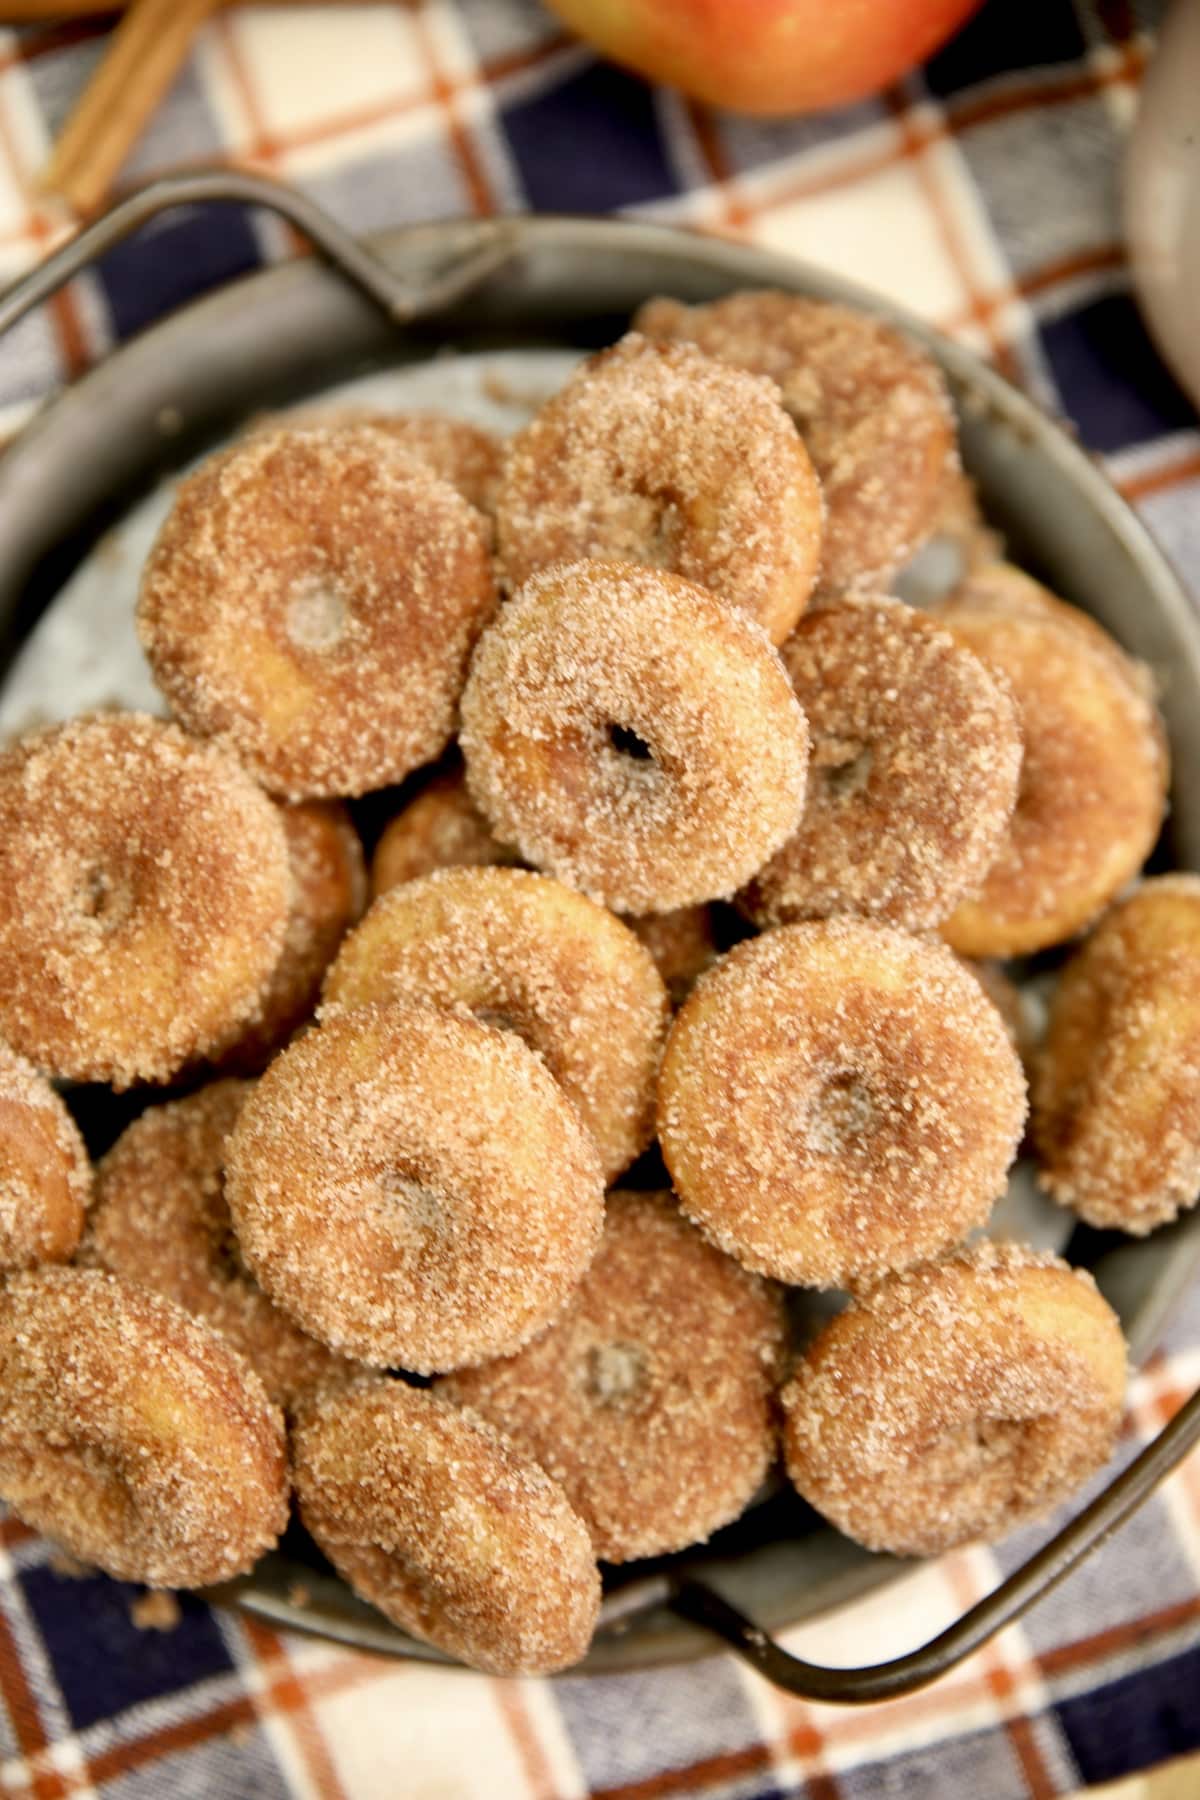 Mini donuts with cinnamon sugar.